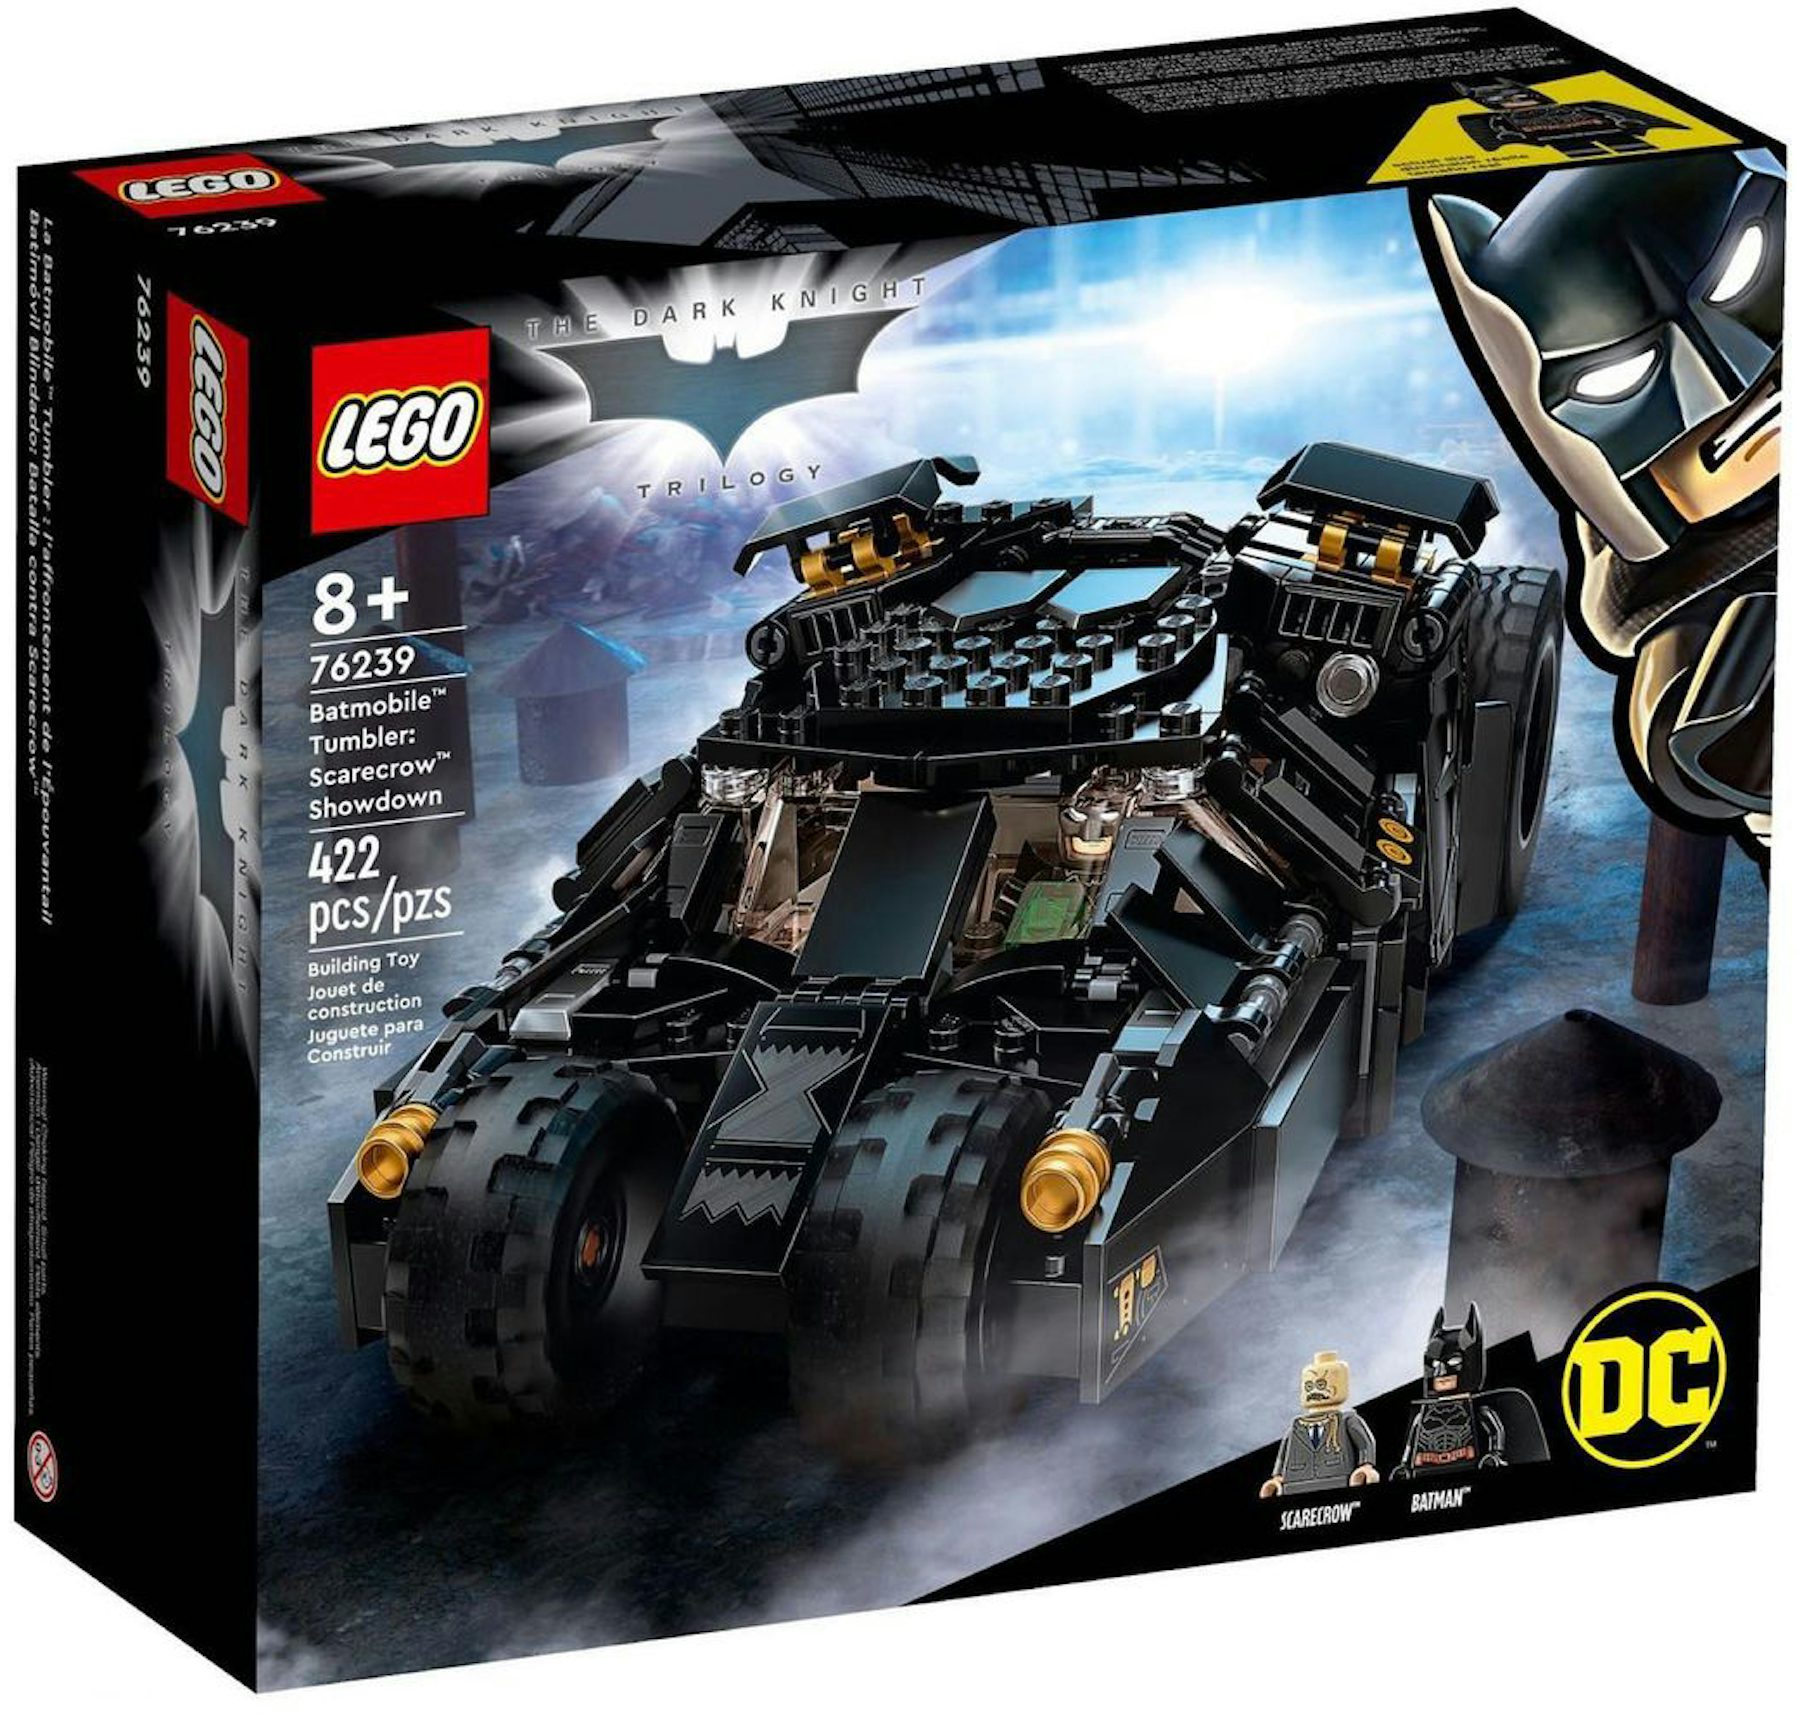 https://images.stockx.com/images/LEGO-Batman-Batmobile-Tumbler-Scarecrow-Showdown-Set-76239-Black.jpg?fit=fill&bg=FFFFFF&w=1200&h=857&fm=jpg&auto=compress&dpr=2&trim=color&updated_at=1631216840&q=60